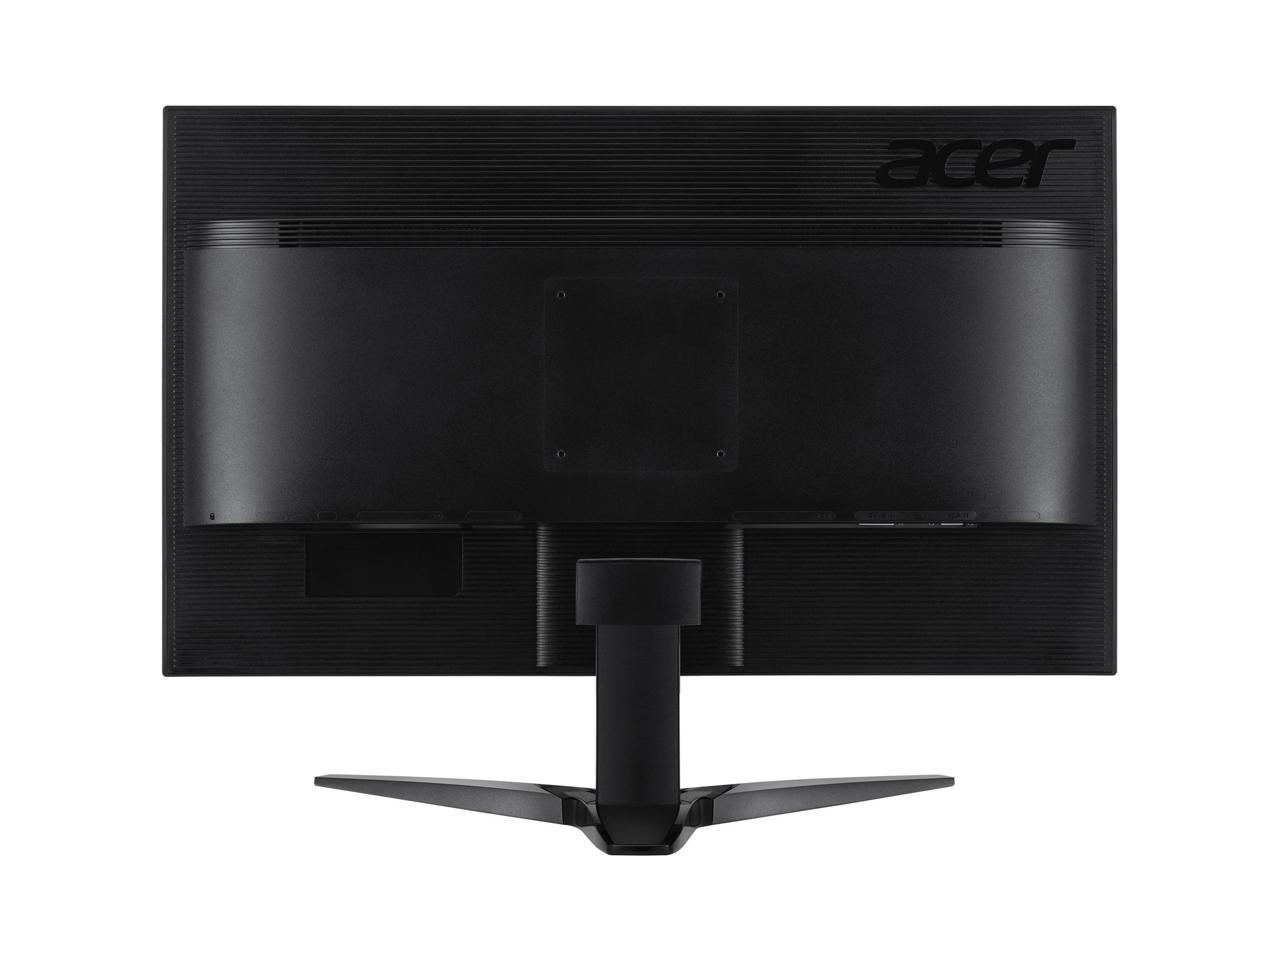 Acer KG1 KG271U Abmiipx 27" WQHD 2560 x 1440 (2K) 144 Hz 1 ms GTG FreeSync (AMD Adaptive Sync) HDMI, DisplayPort Built-in Speakers Gaming Monitor